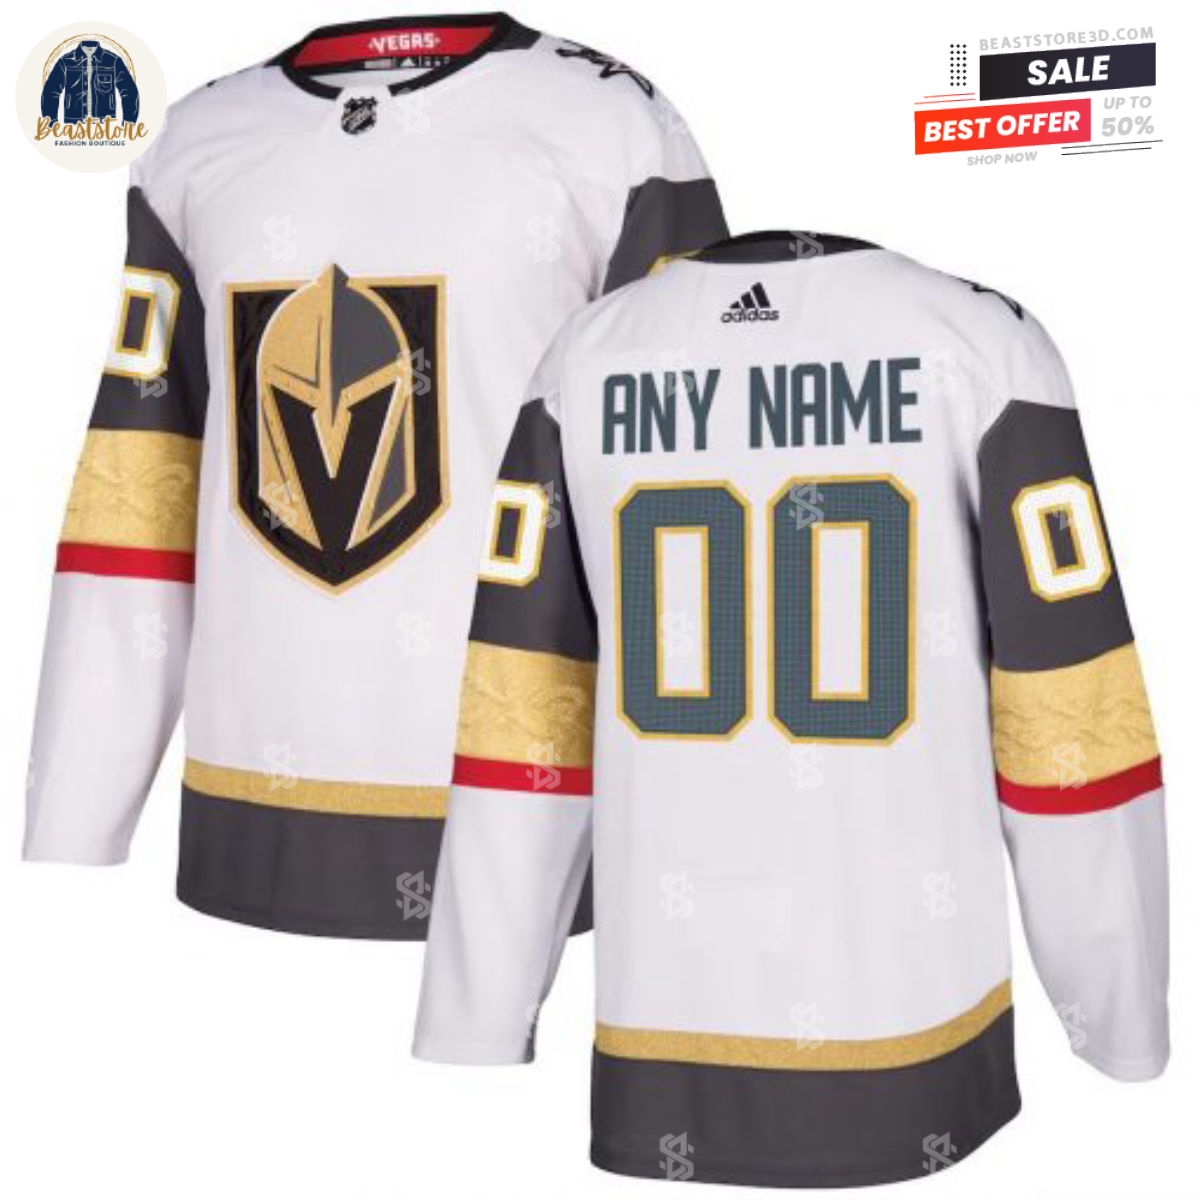 Vegas Golden Knights White Away Personalized NHL Hockey Jerseys